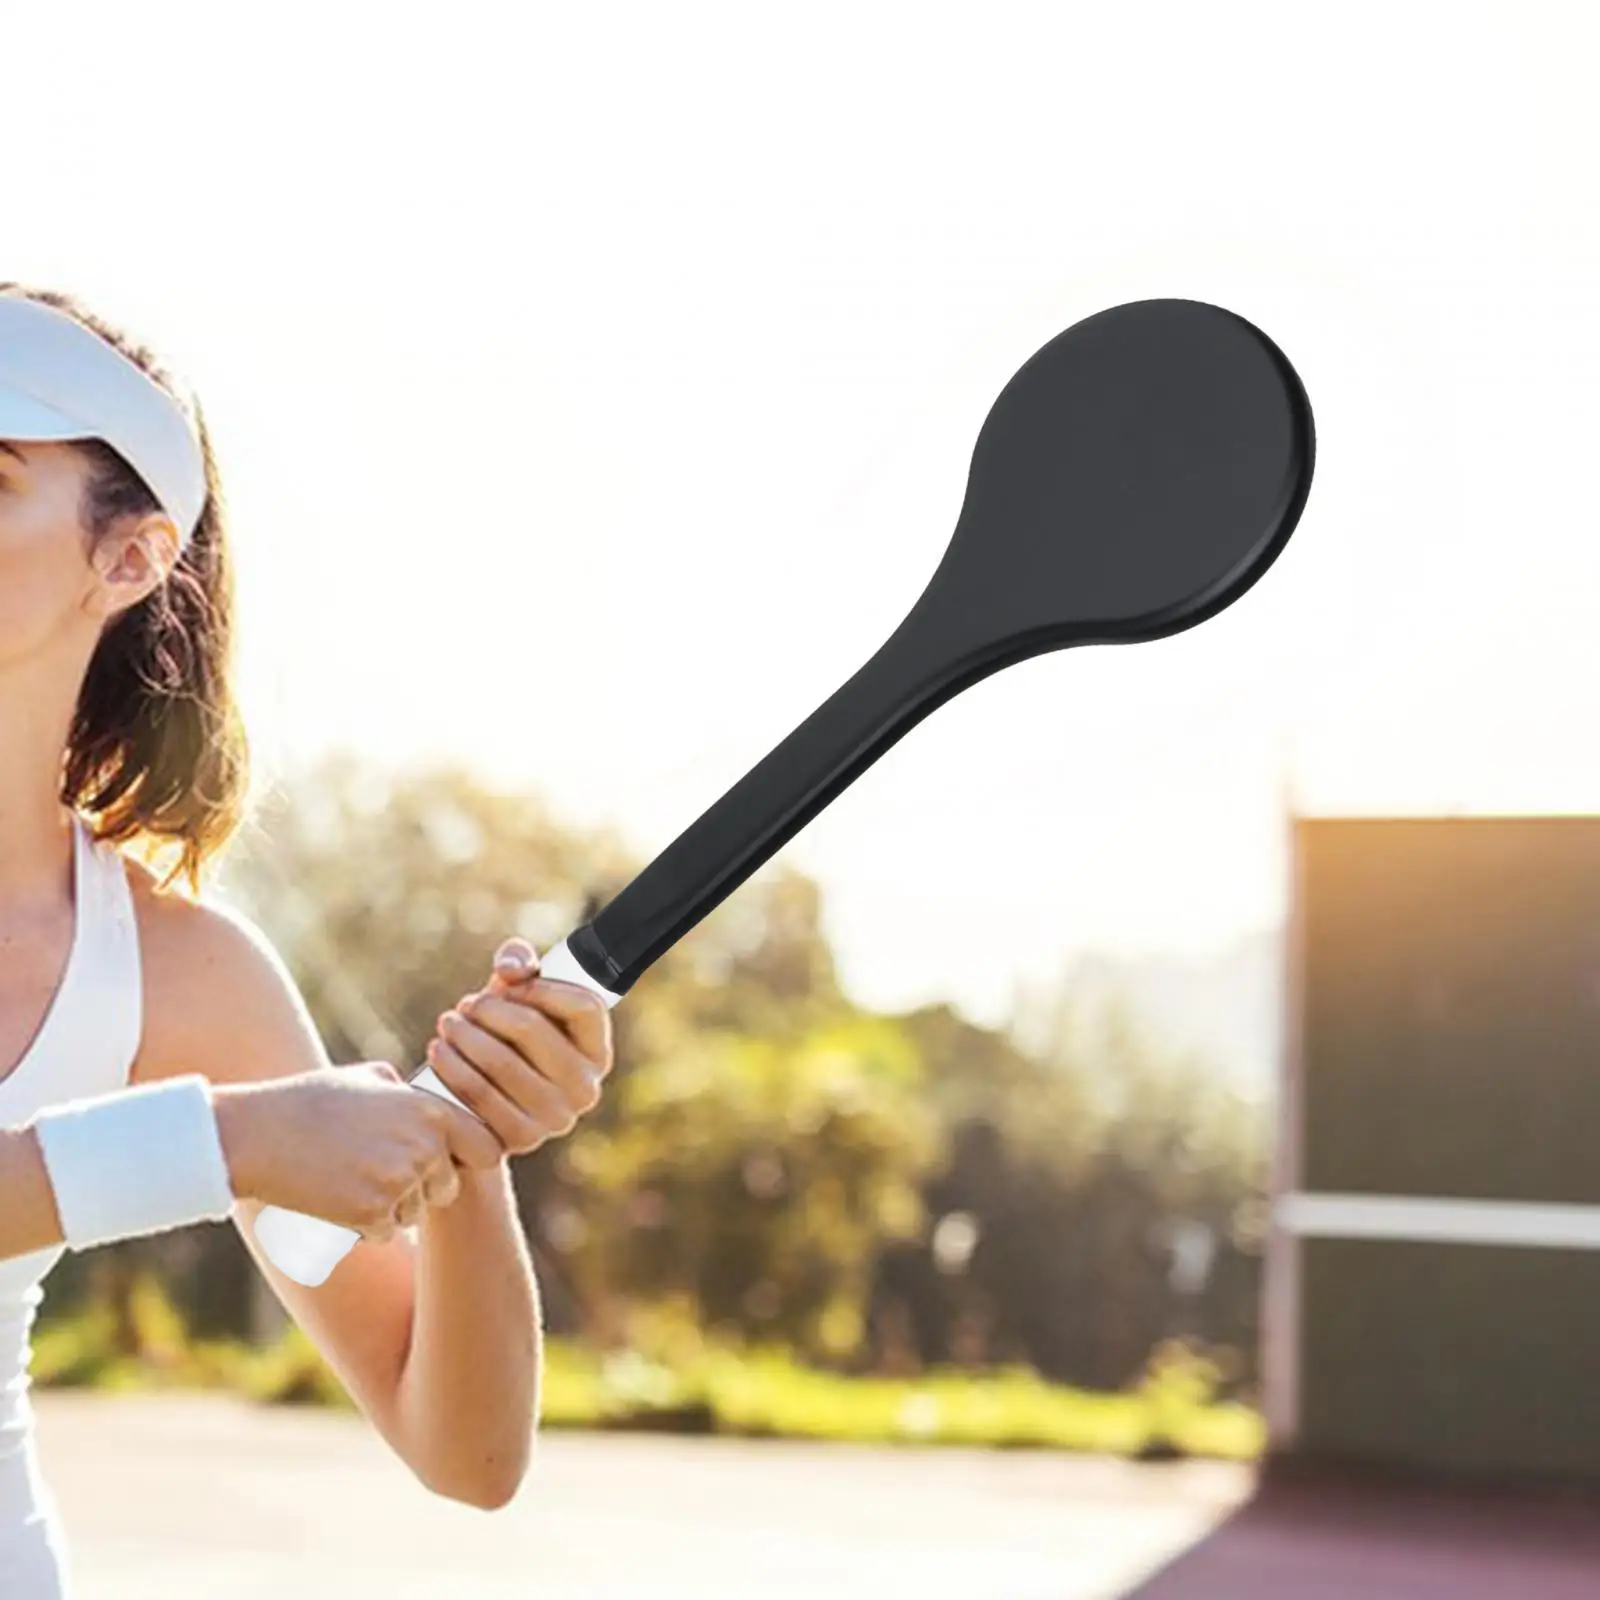 Carbon Fiber Tennis Pointer Racket Tennis Practice Equipment Training Aid Tennis